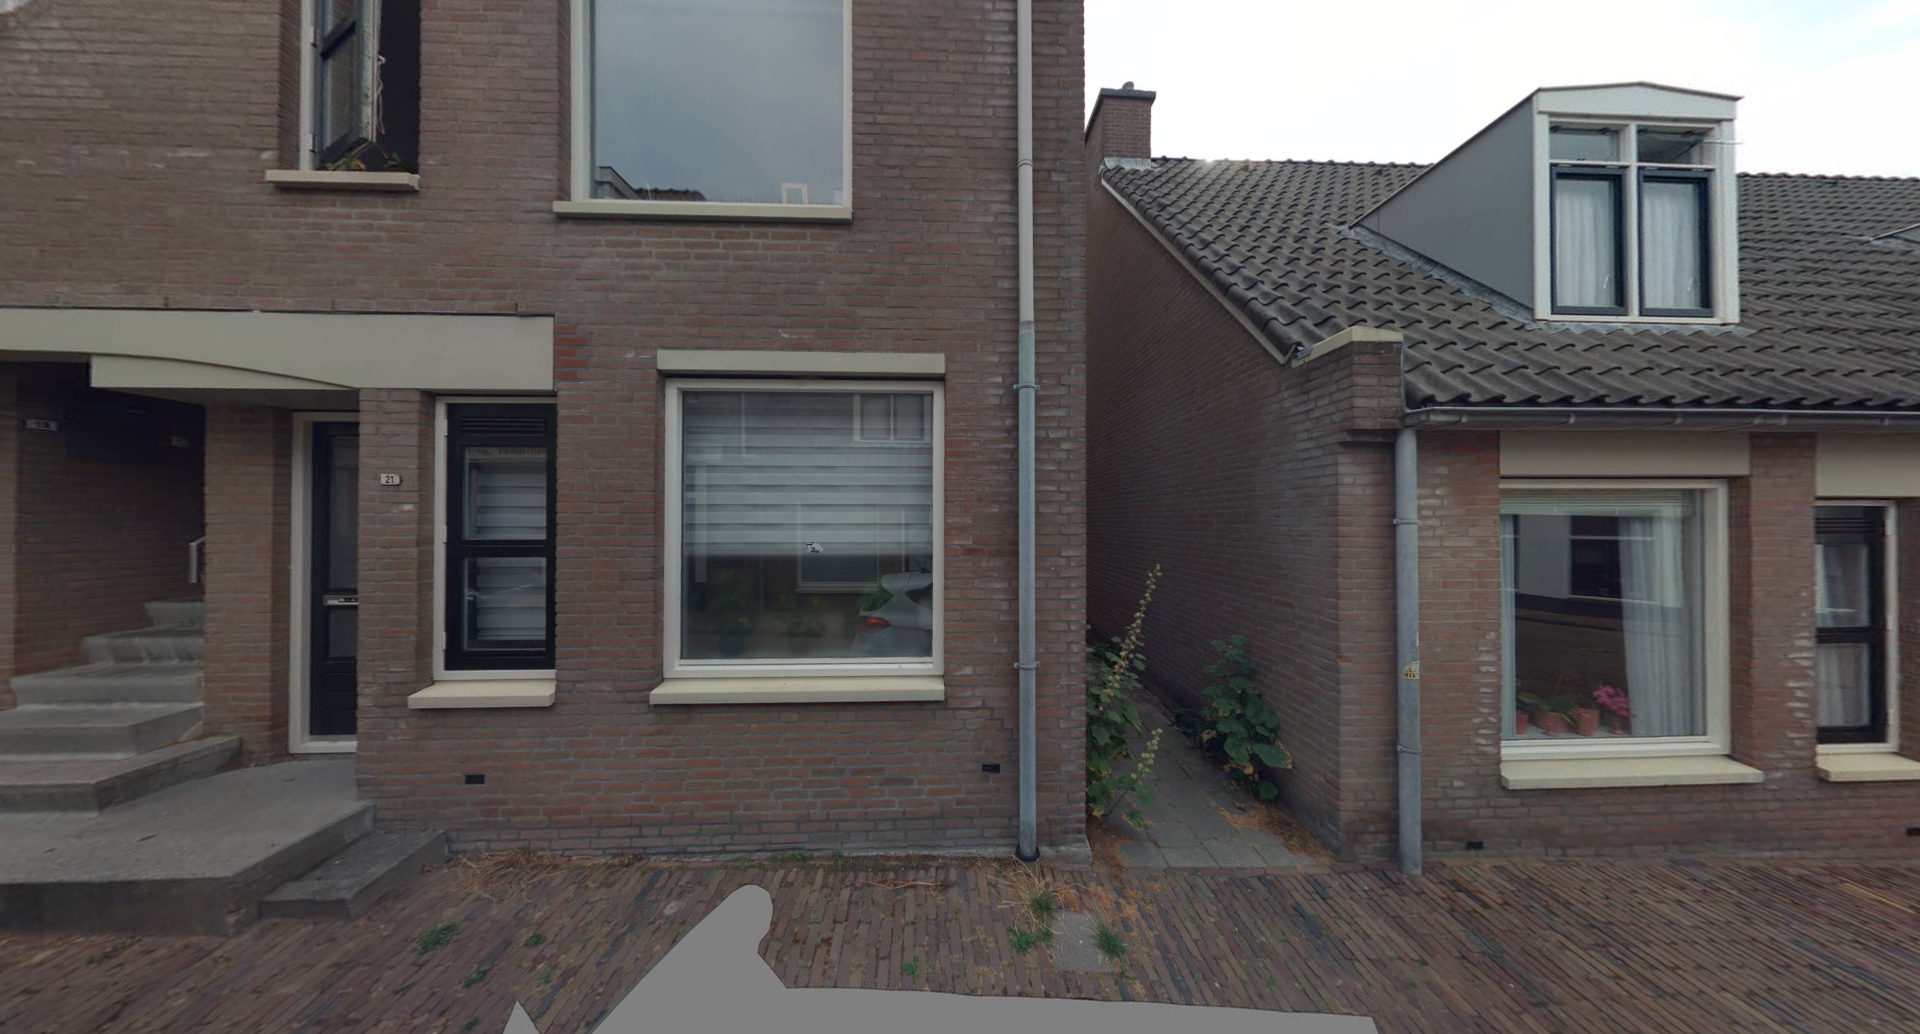 Witherenstraat 21, 8701 JJ Bolsward, Nederland